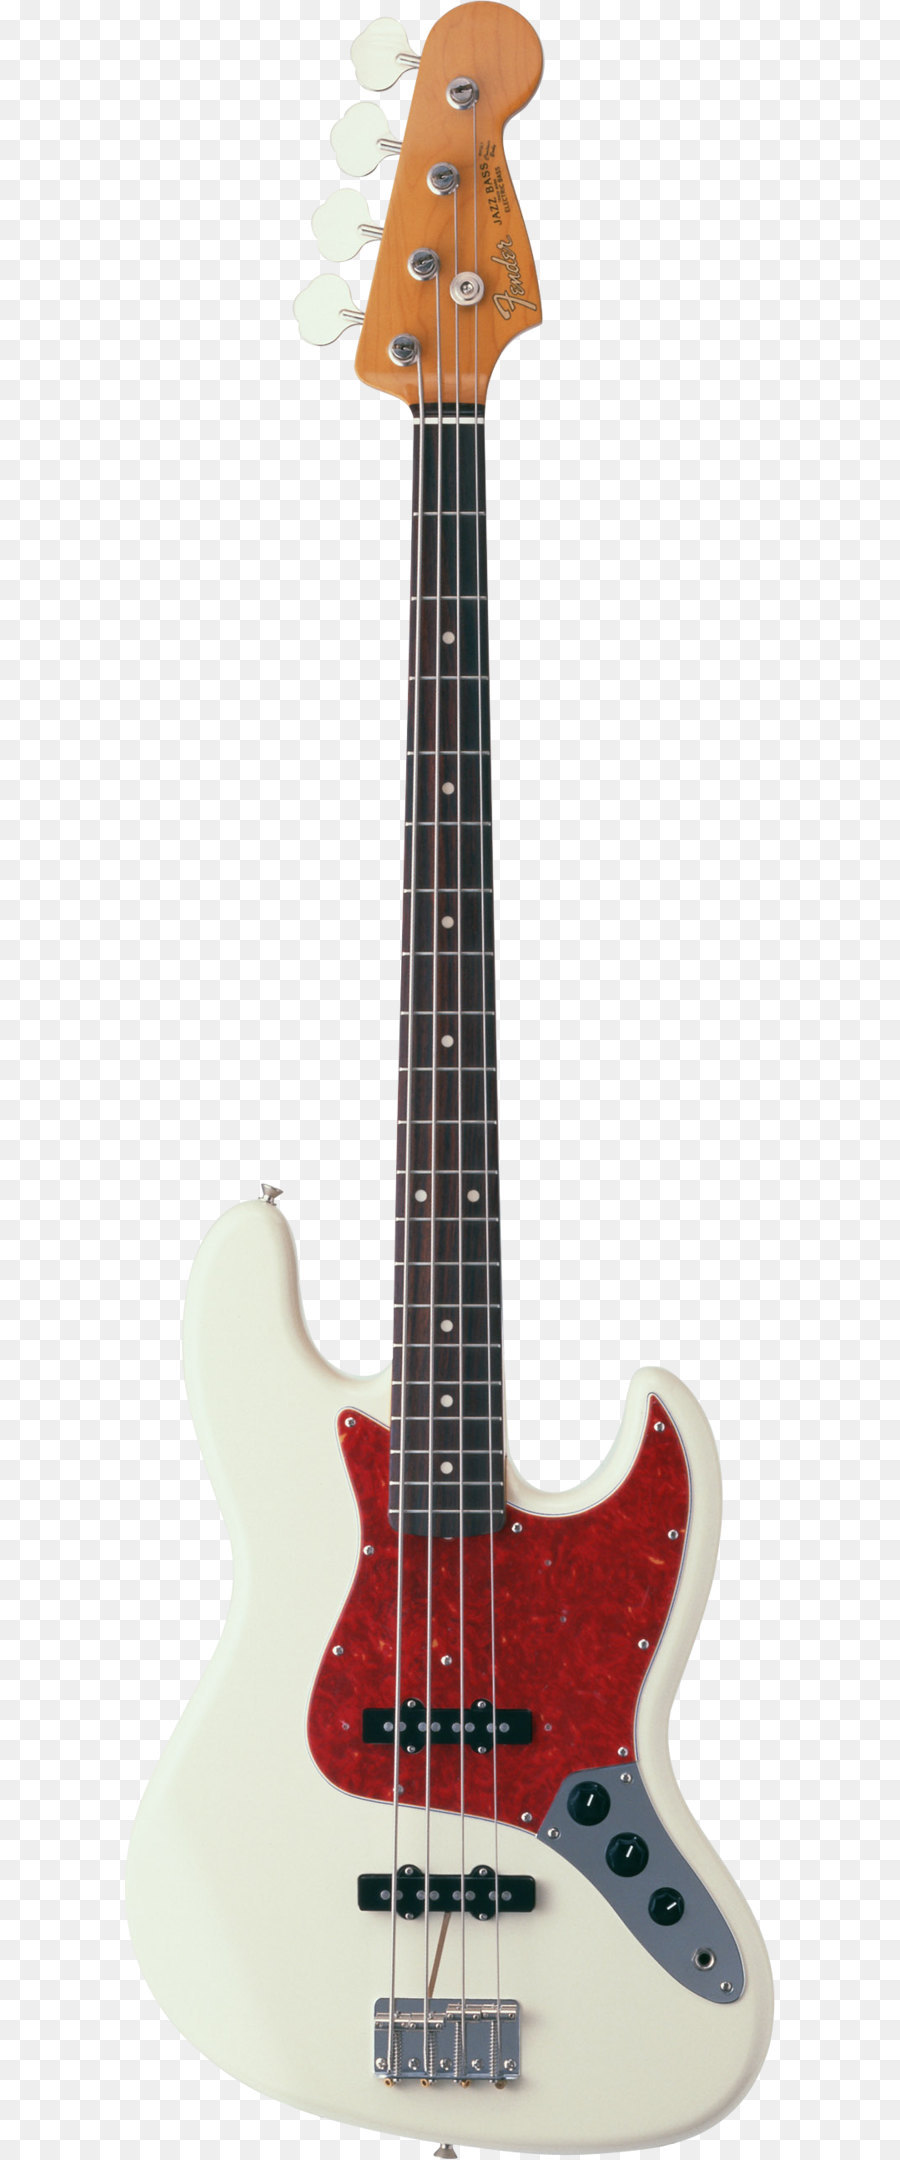 Fender Precision Bass Fender Jaguar Fender Stratocaster Bassgitarre Fender Jazz Bass - E Gitarre png